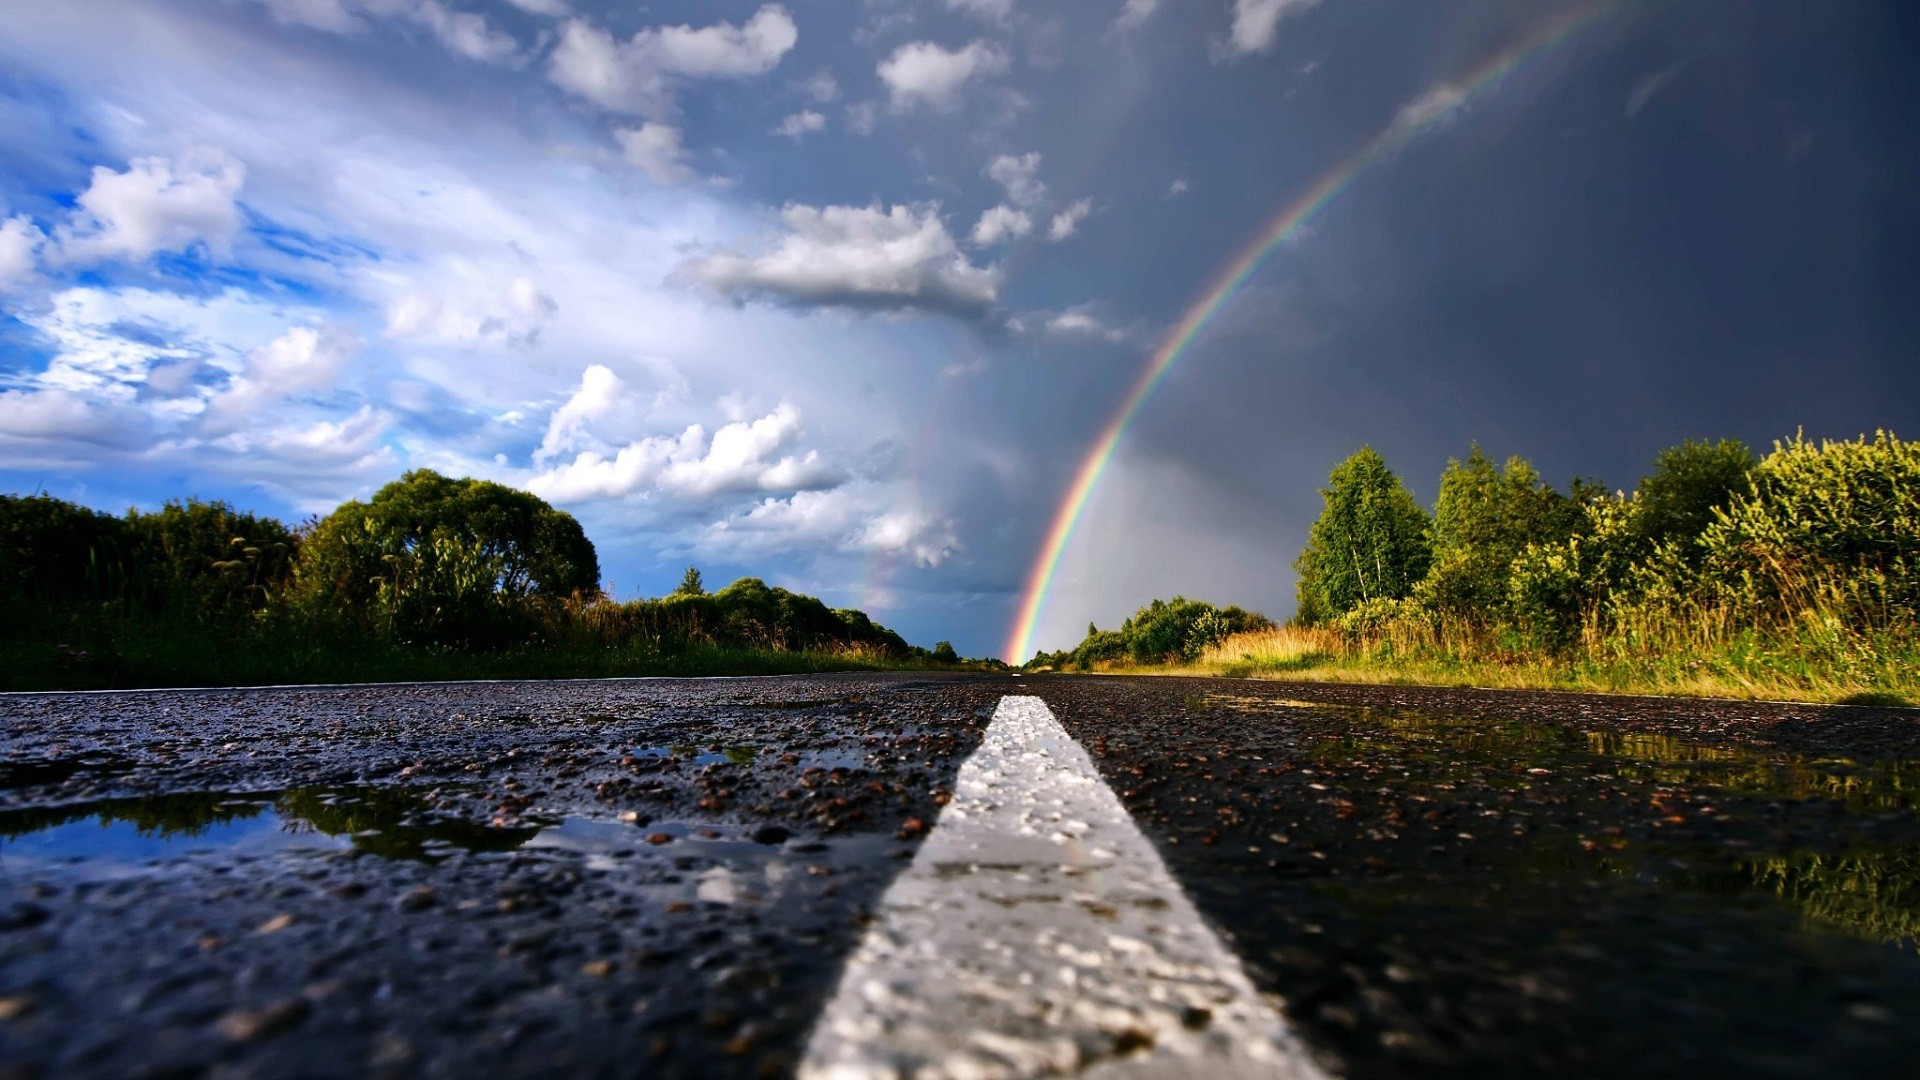 General 1920x1080 nature rainbows road wet street clouds worm's eye view wet sky wet road asphalt